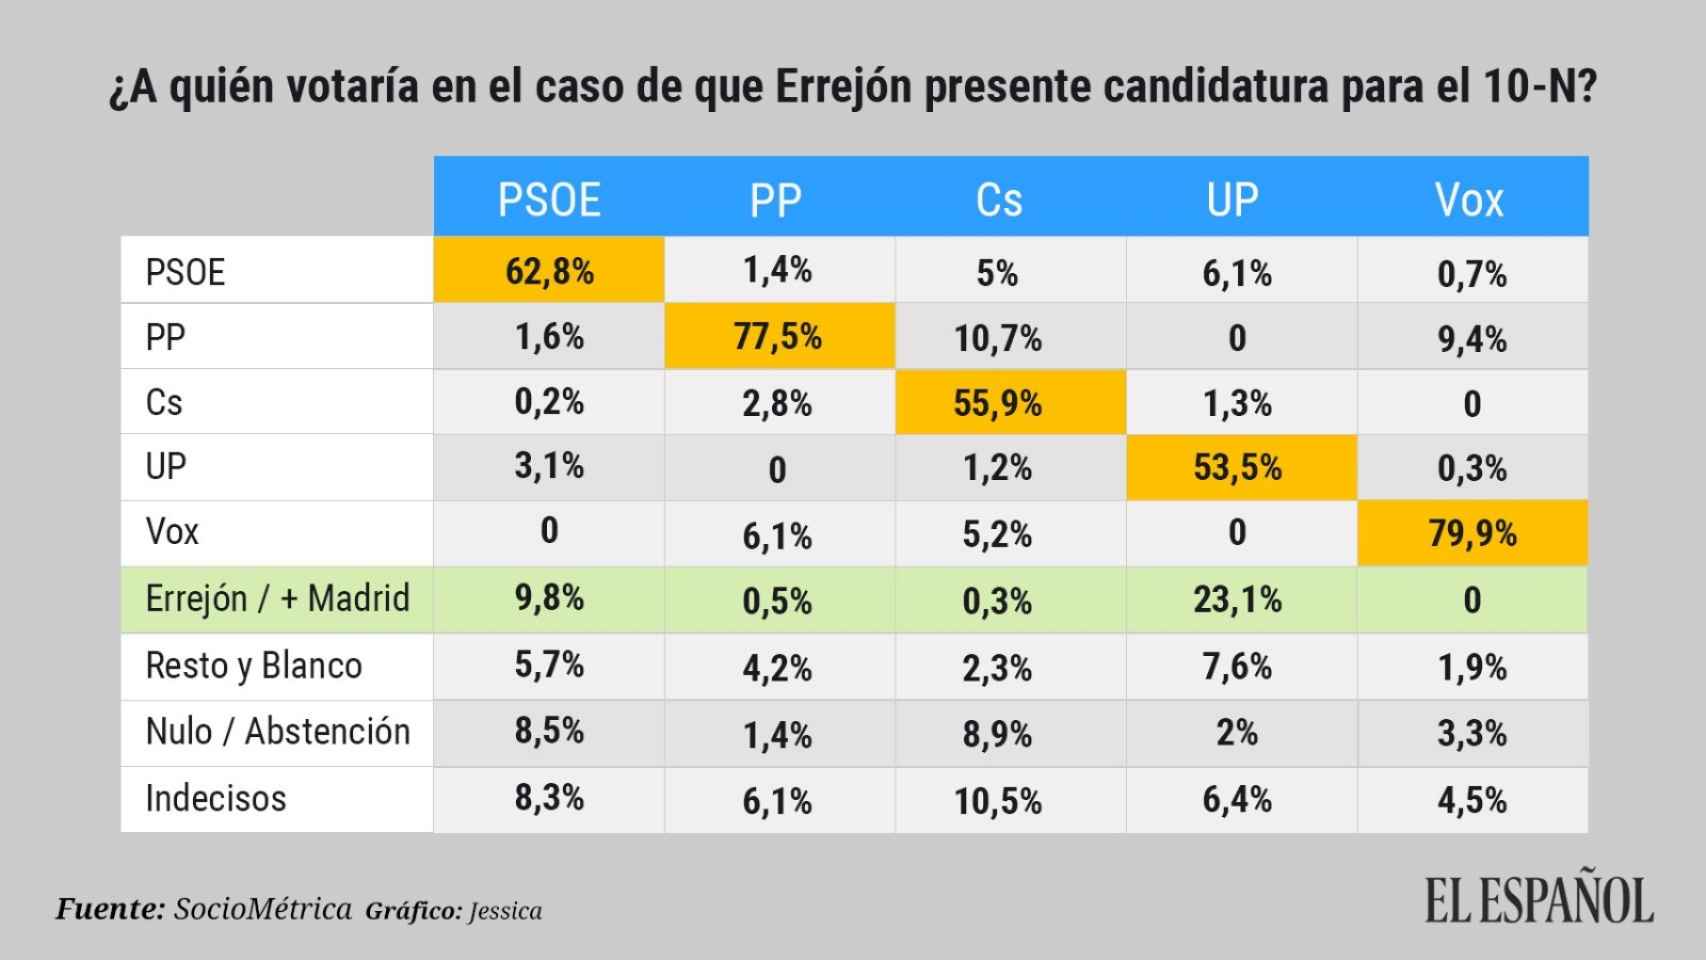 Transferencia de voto entre partidos si se presentara Errejón al 10-N.